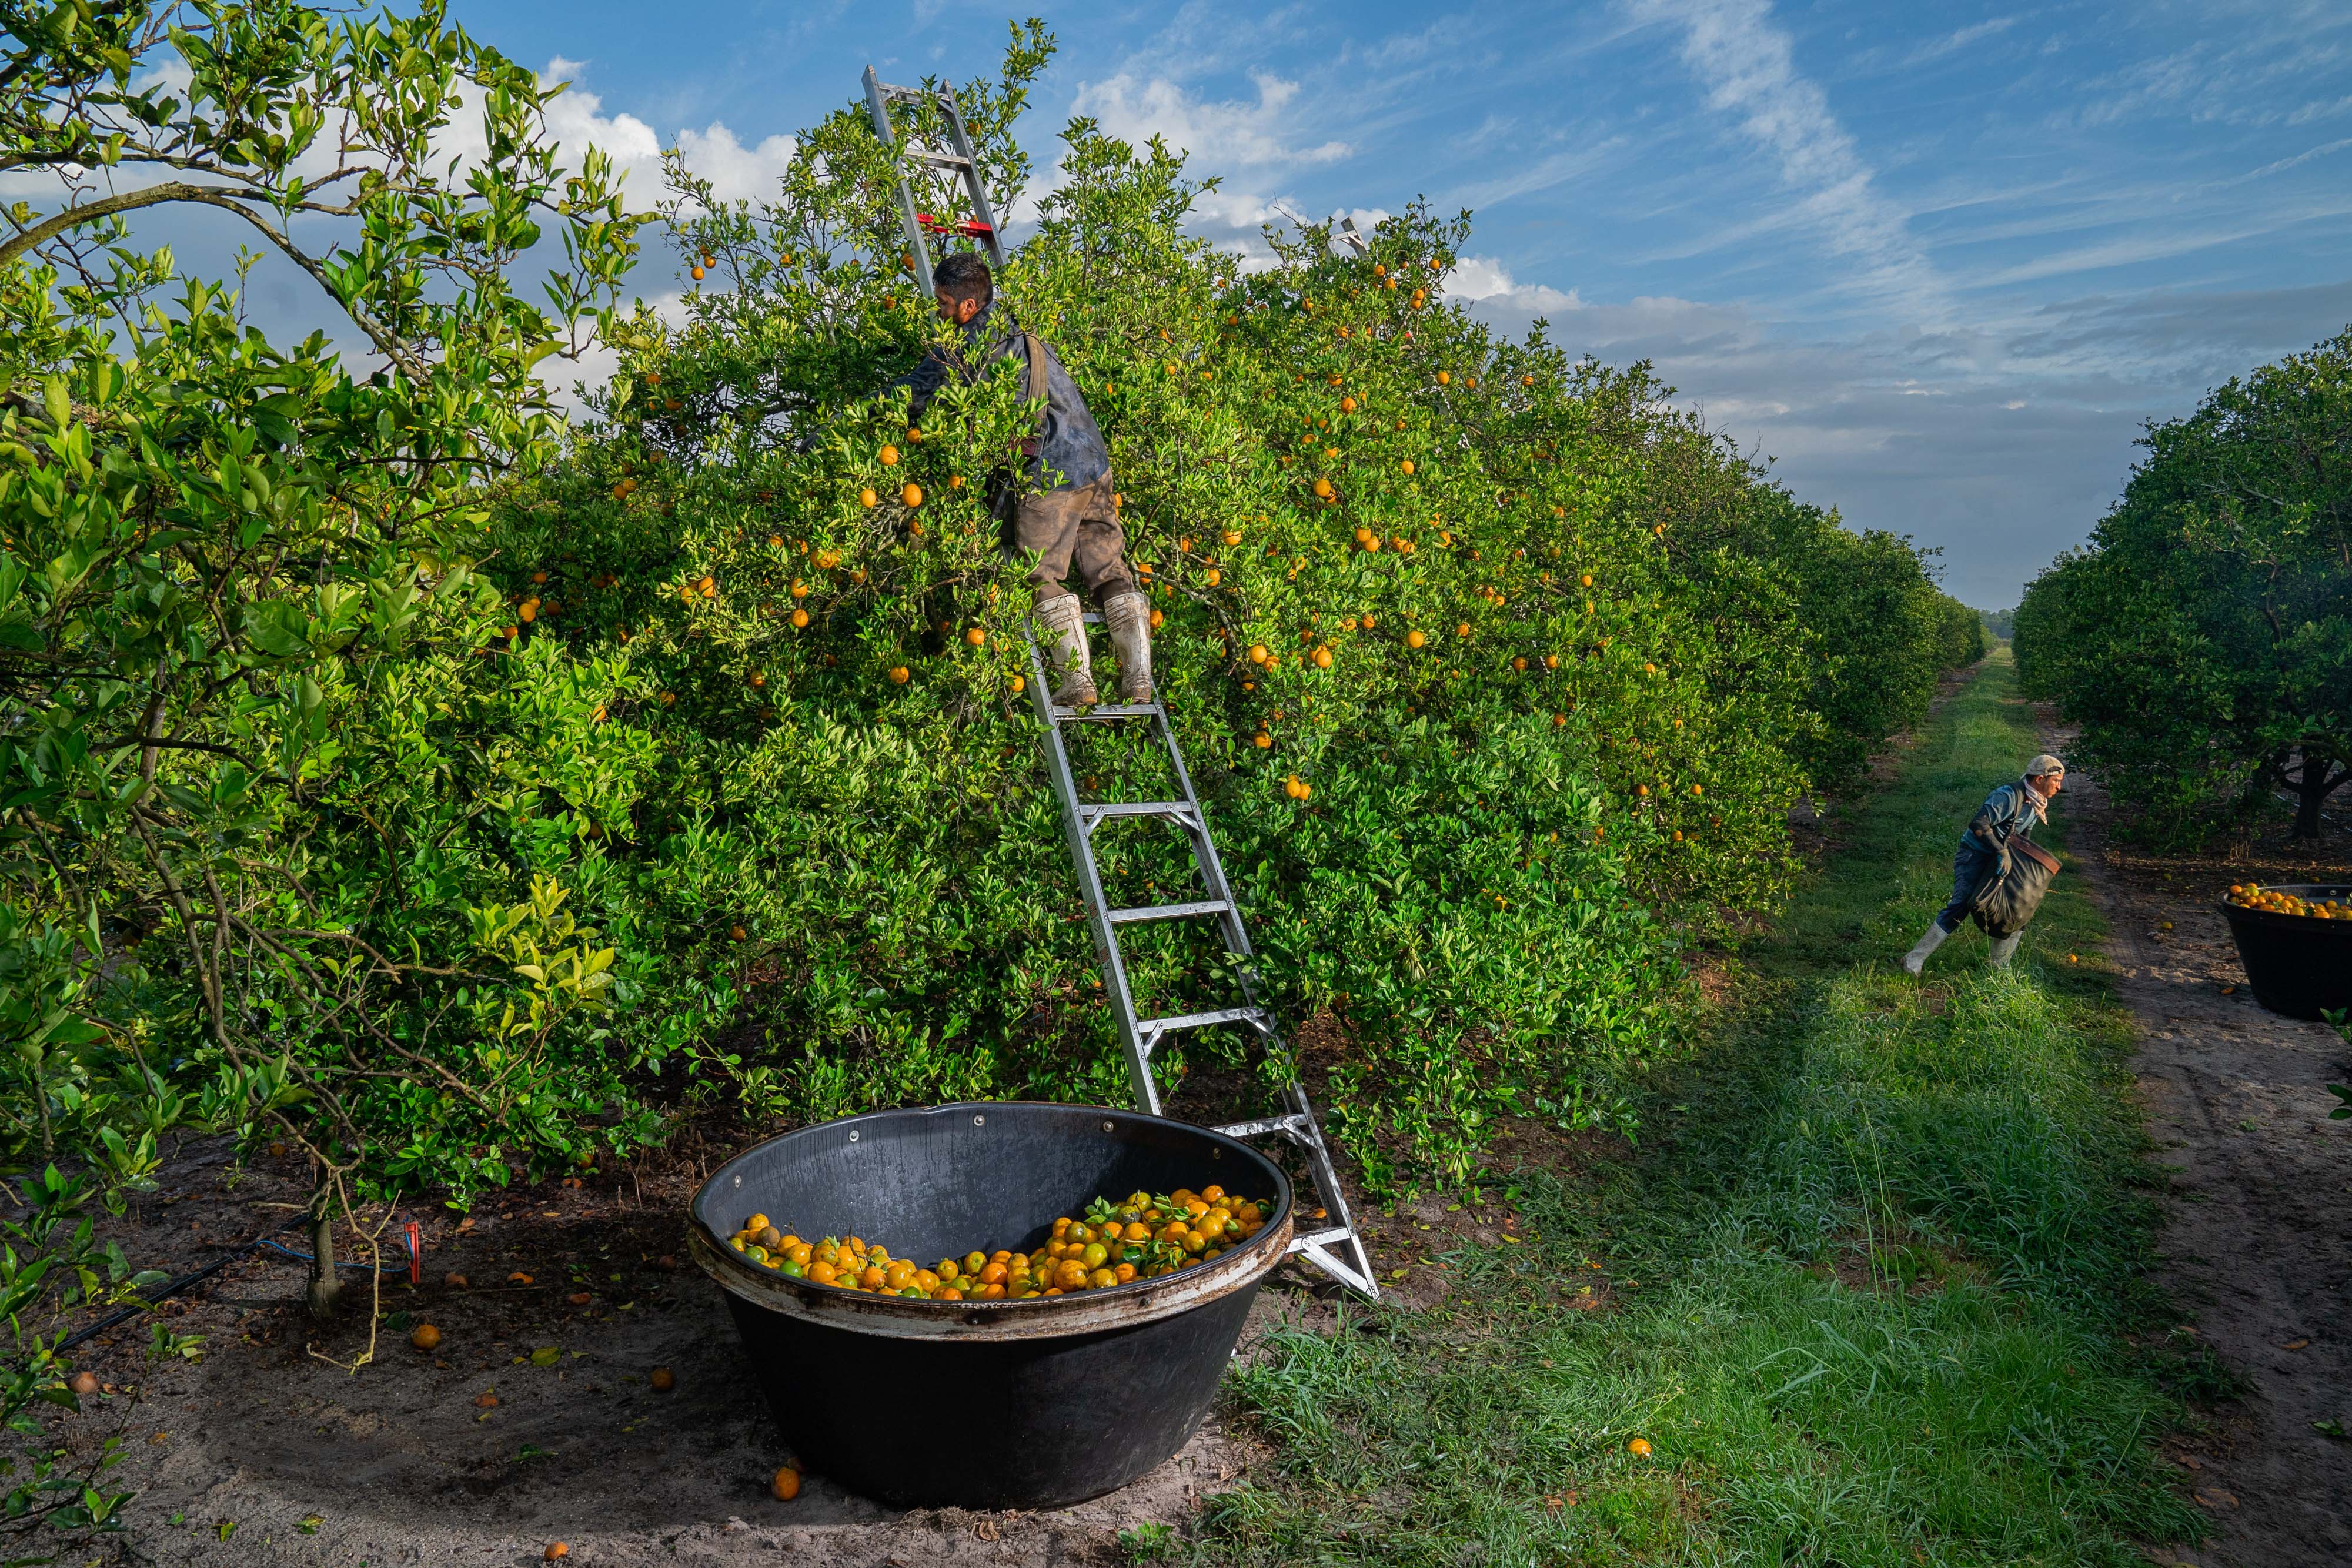 A man picks oranges in a Florida orange grove